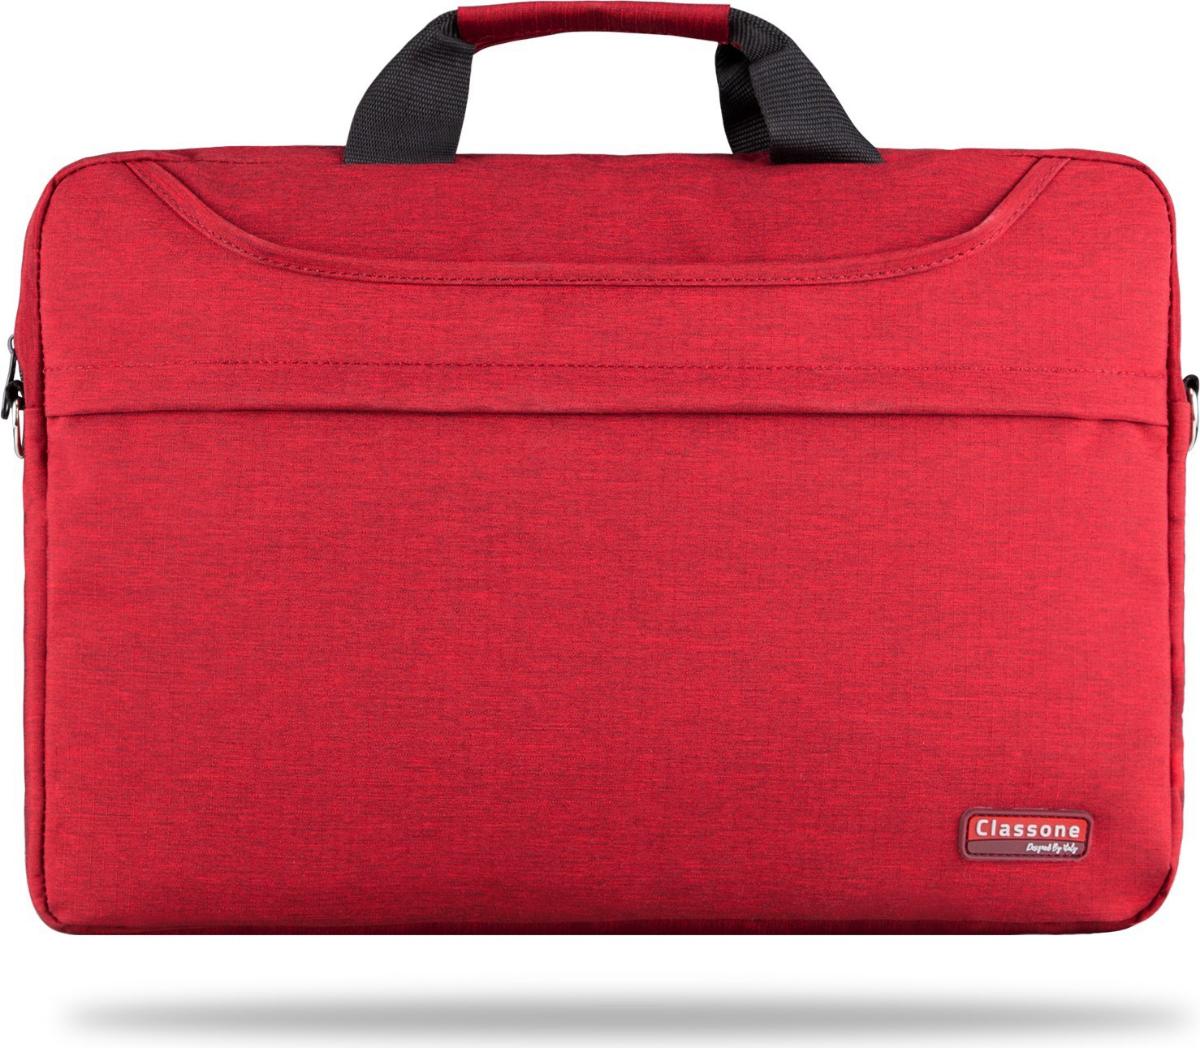 Classone TL2565 WTX 15.6 inç Kumaş Su Geçirmez Laptop Postacı Çantası Kırmızı